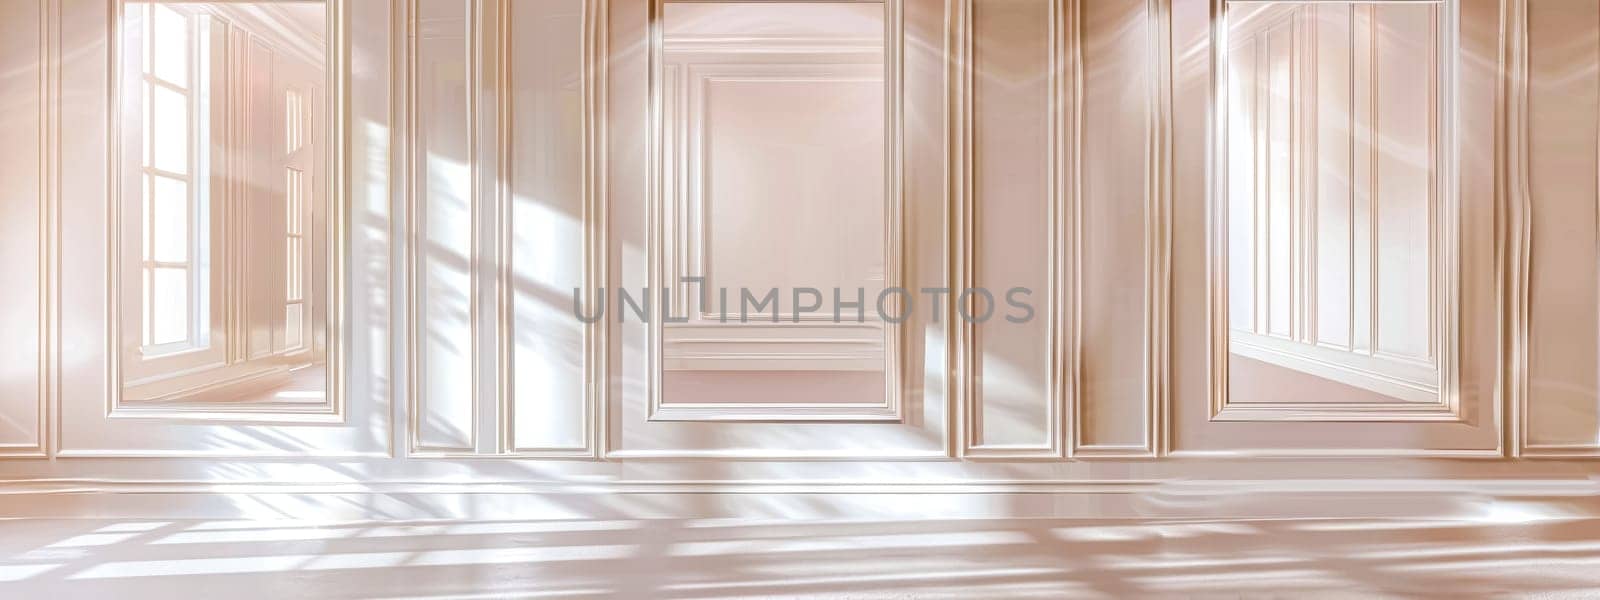 Serene sunlit corridor with elegant shadows by Edophoto